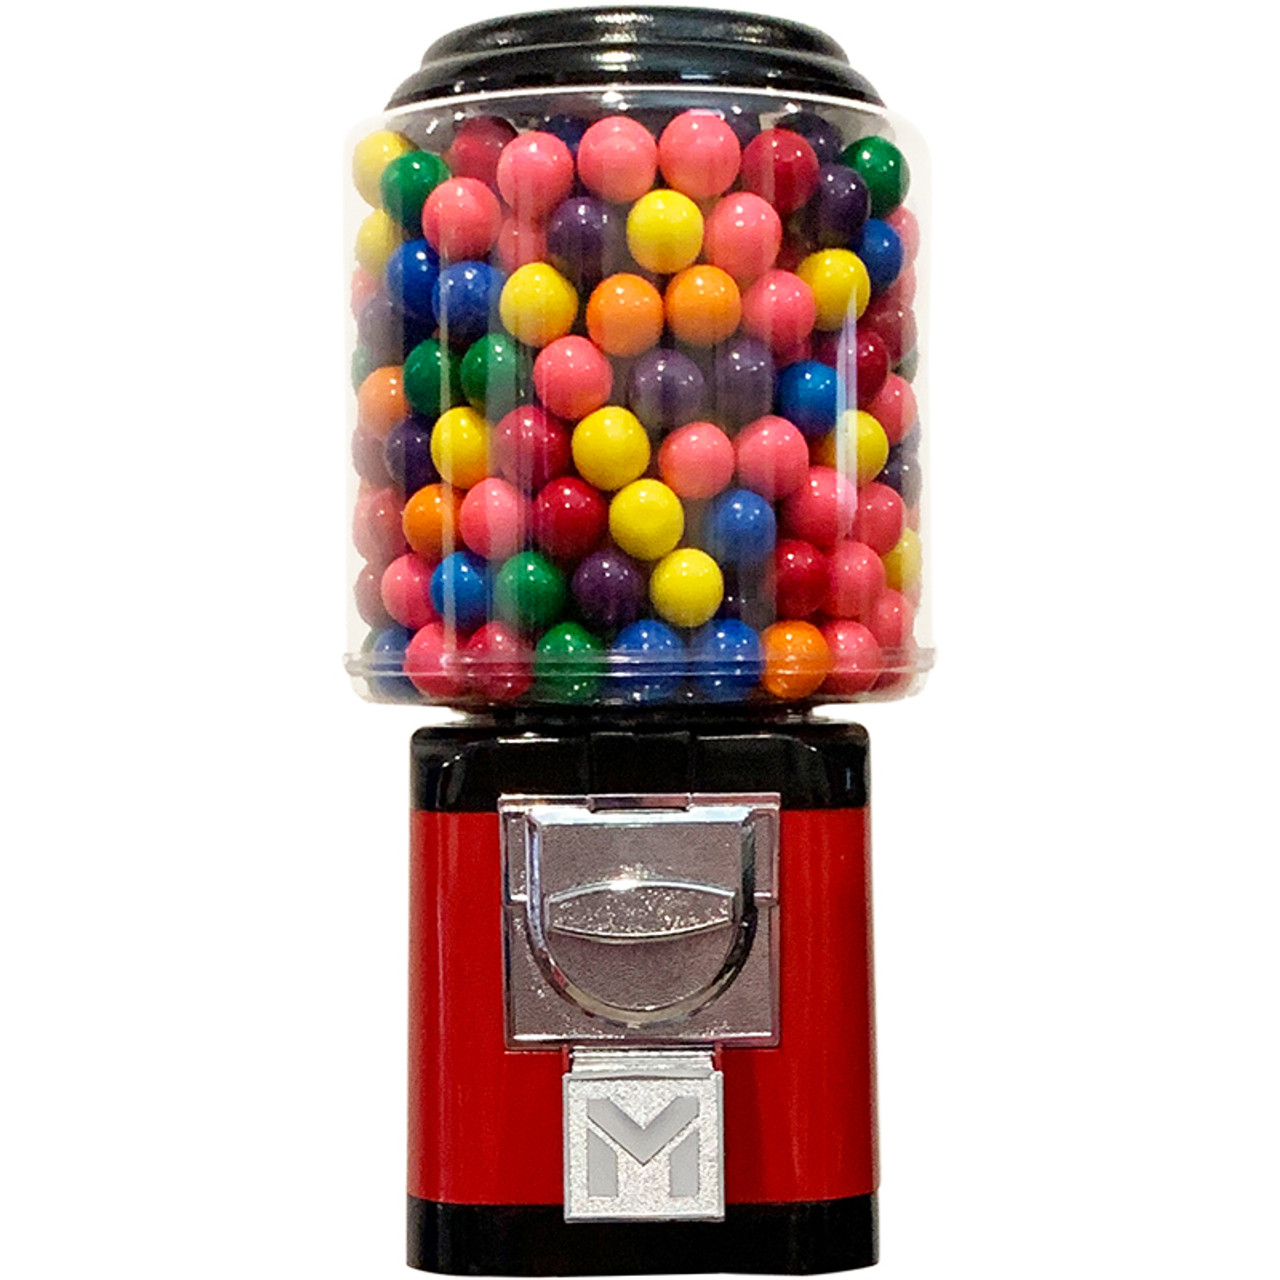 OAK Vendor PRICE DECAL STICKER Gumball Candy Nut Vending Machine gum 25 Cent 